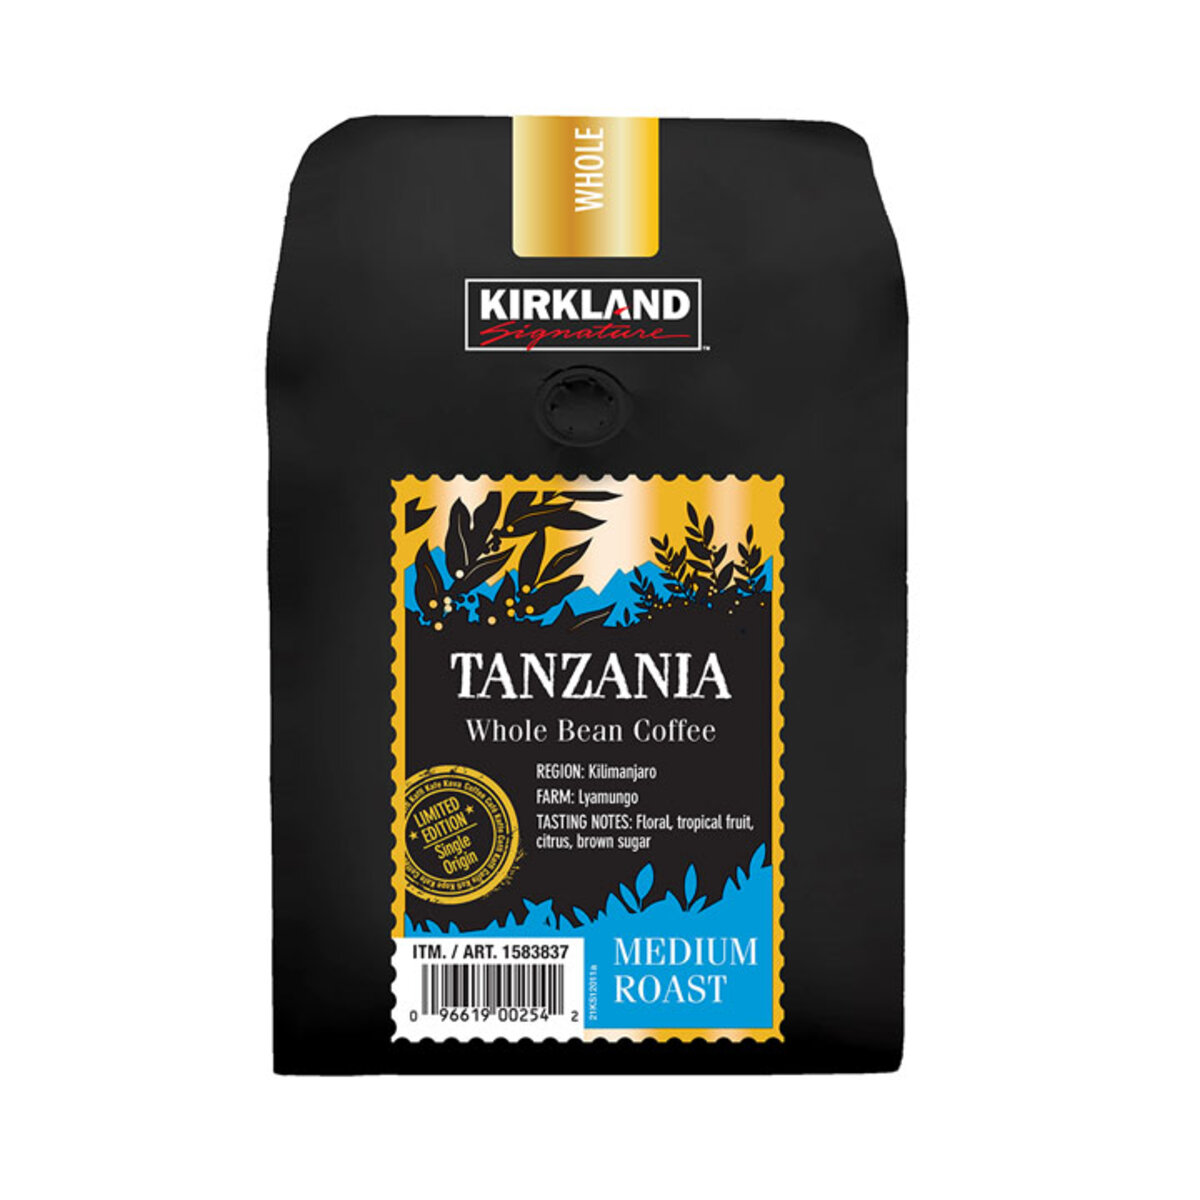 Kirkland Signature Tanzania Whole Bean Coffee Medium Roast, 907g